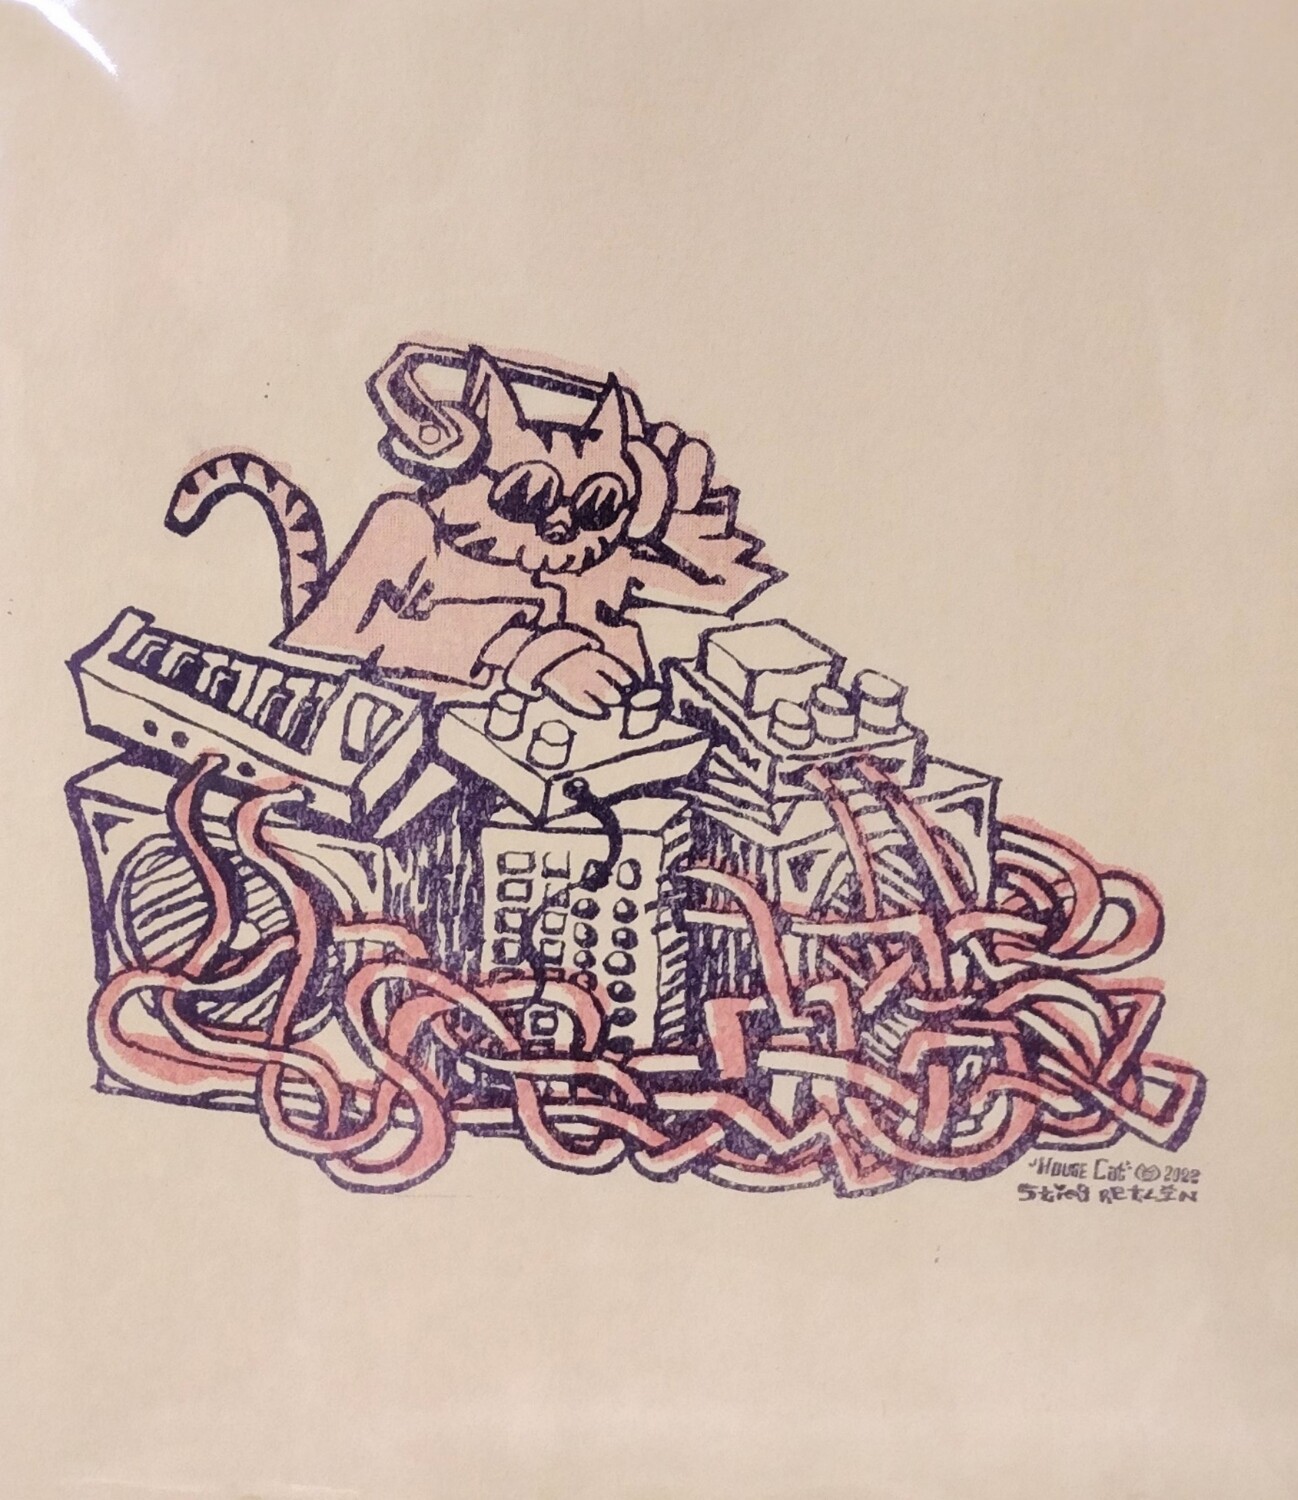 House Cat - Riso Print by Stieg Retlin